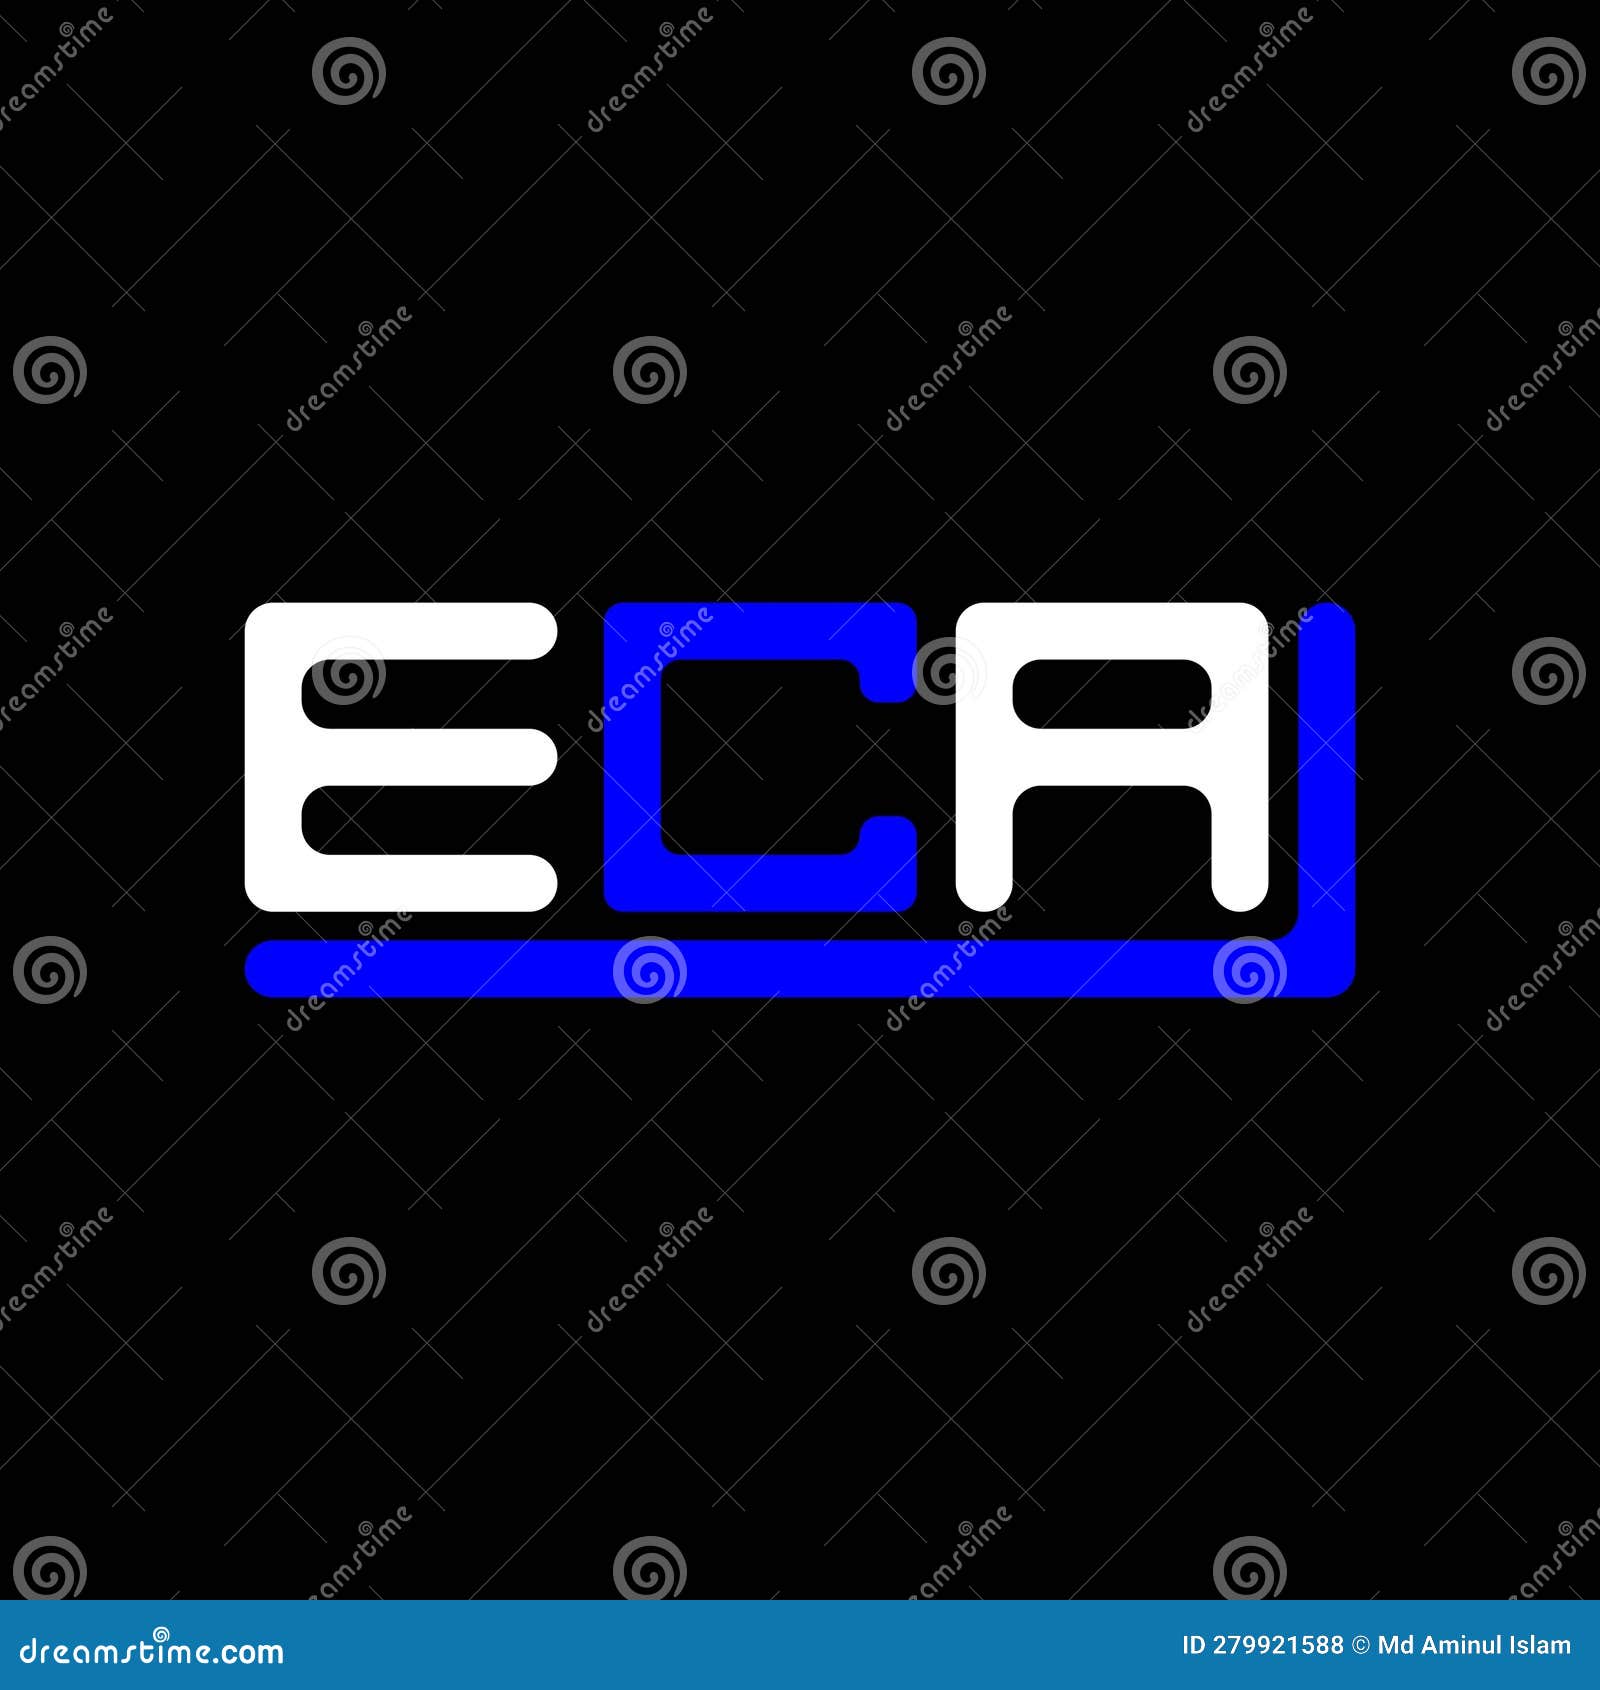 eca letter logo creative  with  graphic, eca